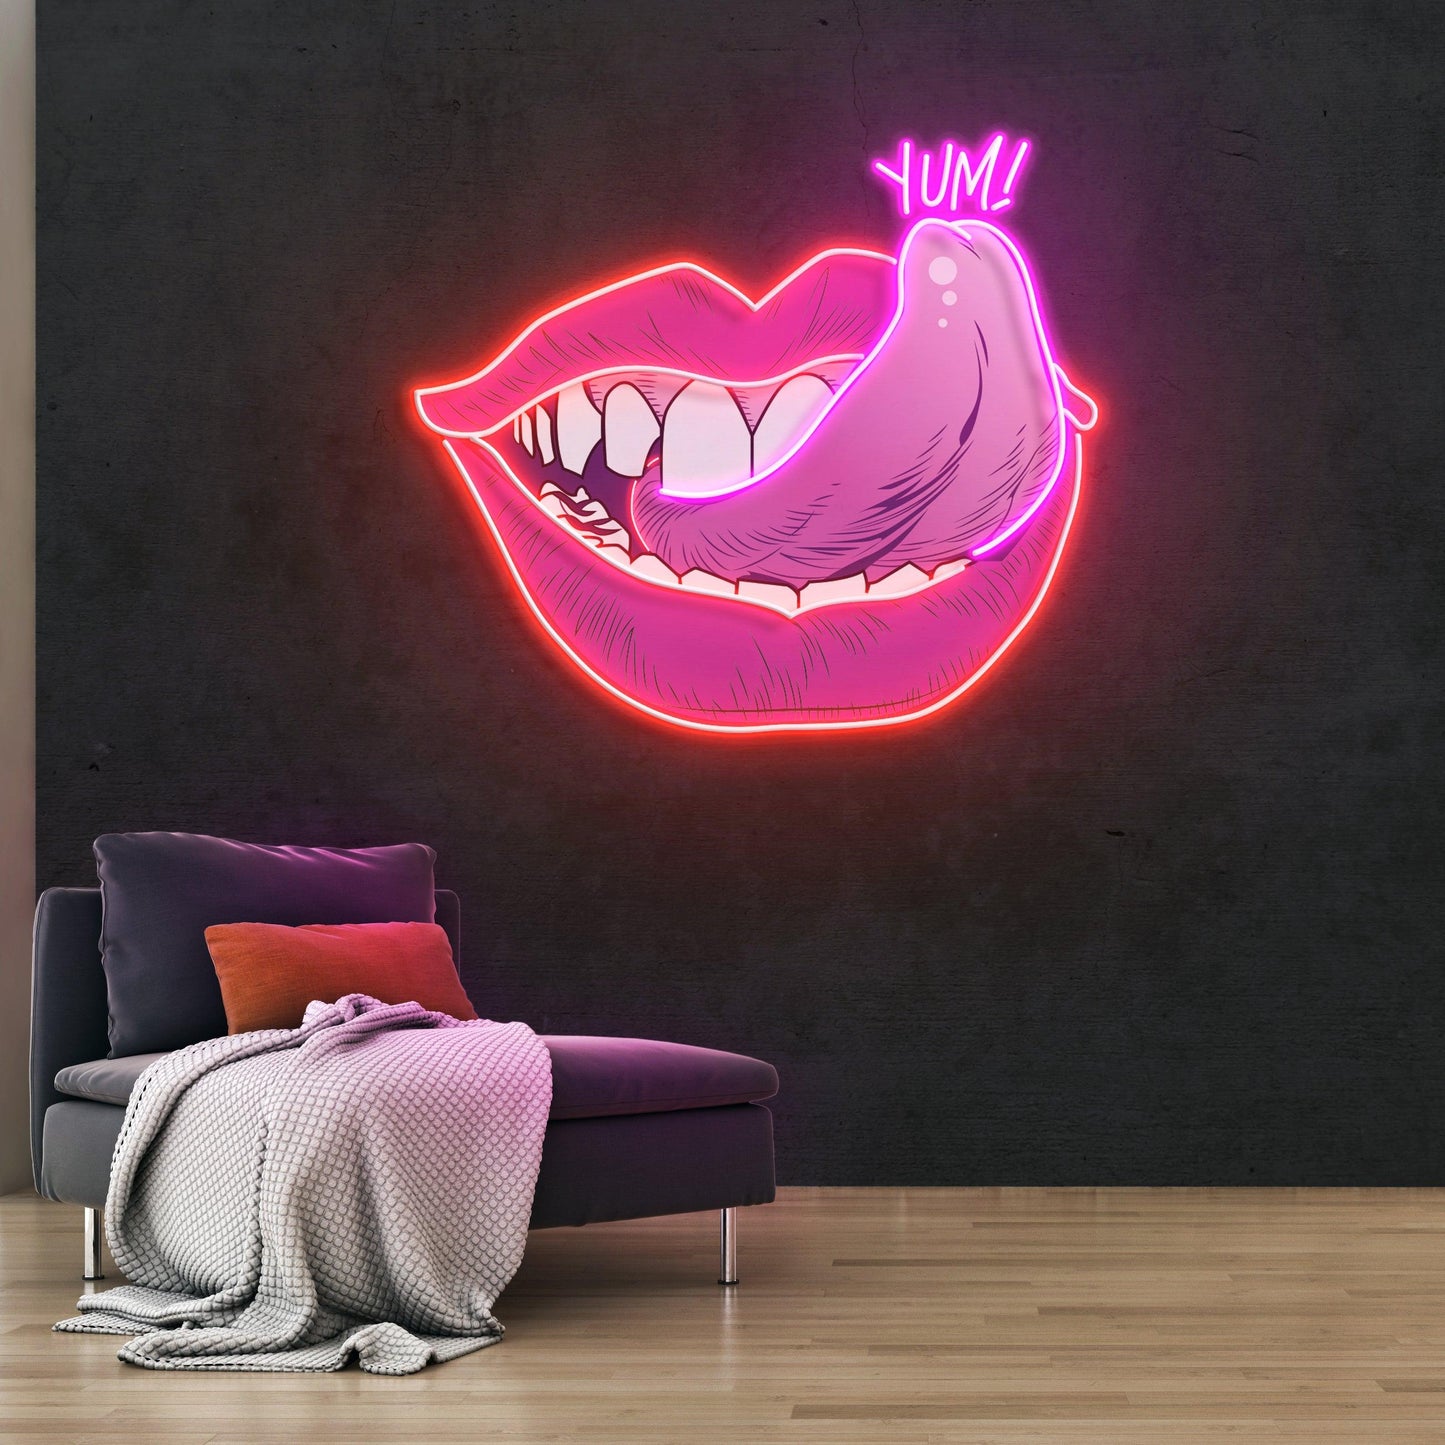 Taste of Your Lips Led Neon Acrylic Artwork